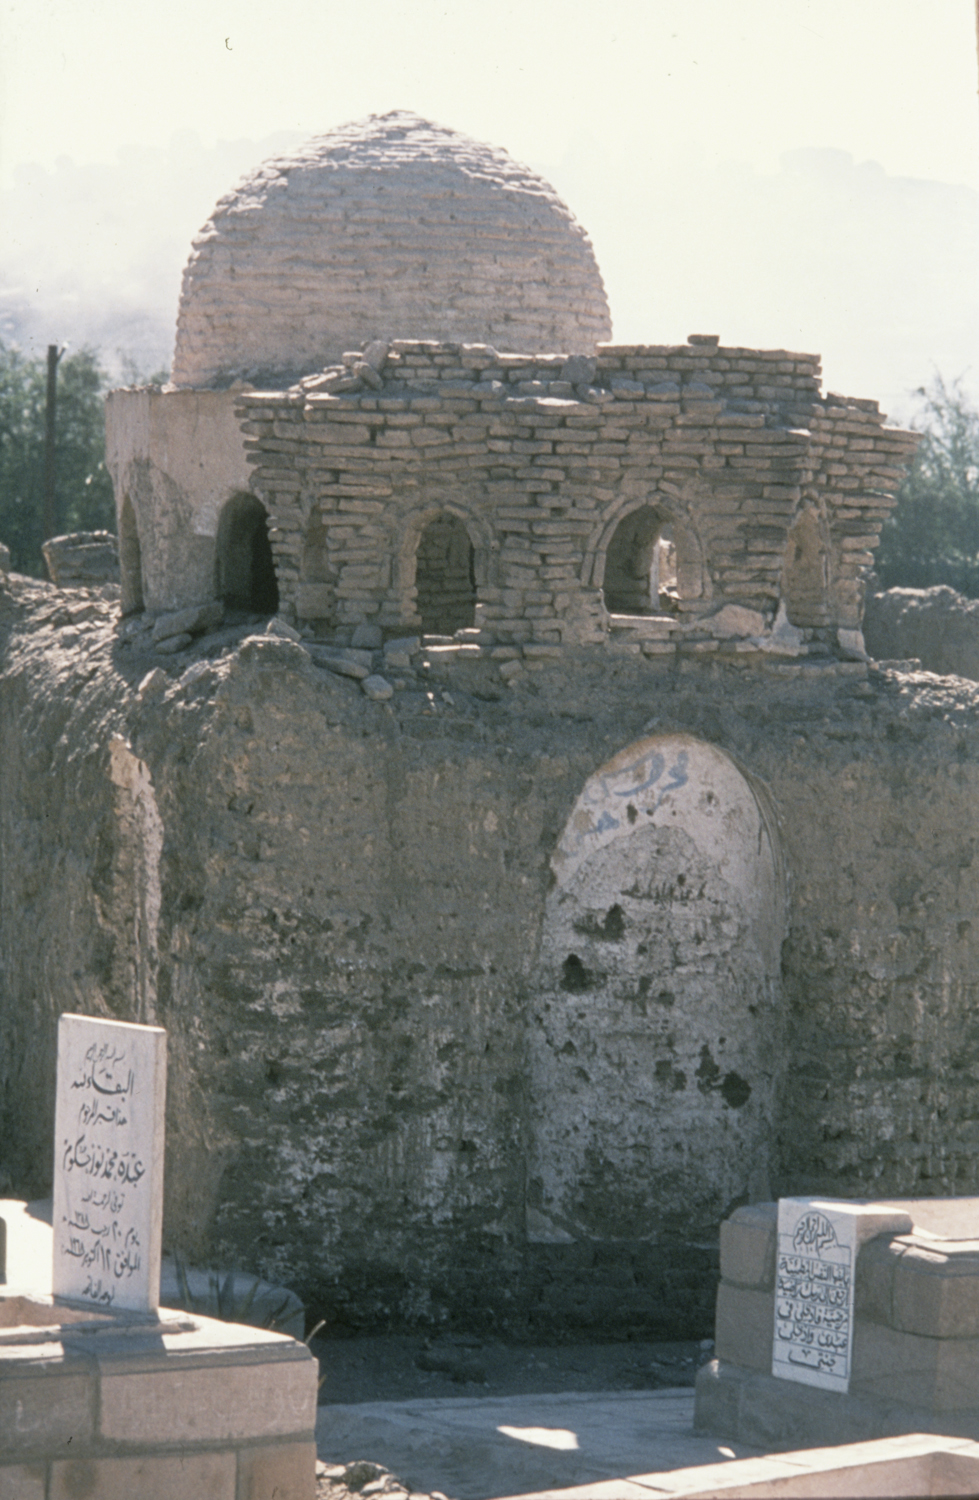 A mausoleum with a fallen dome